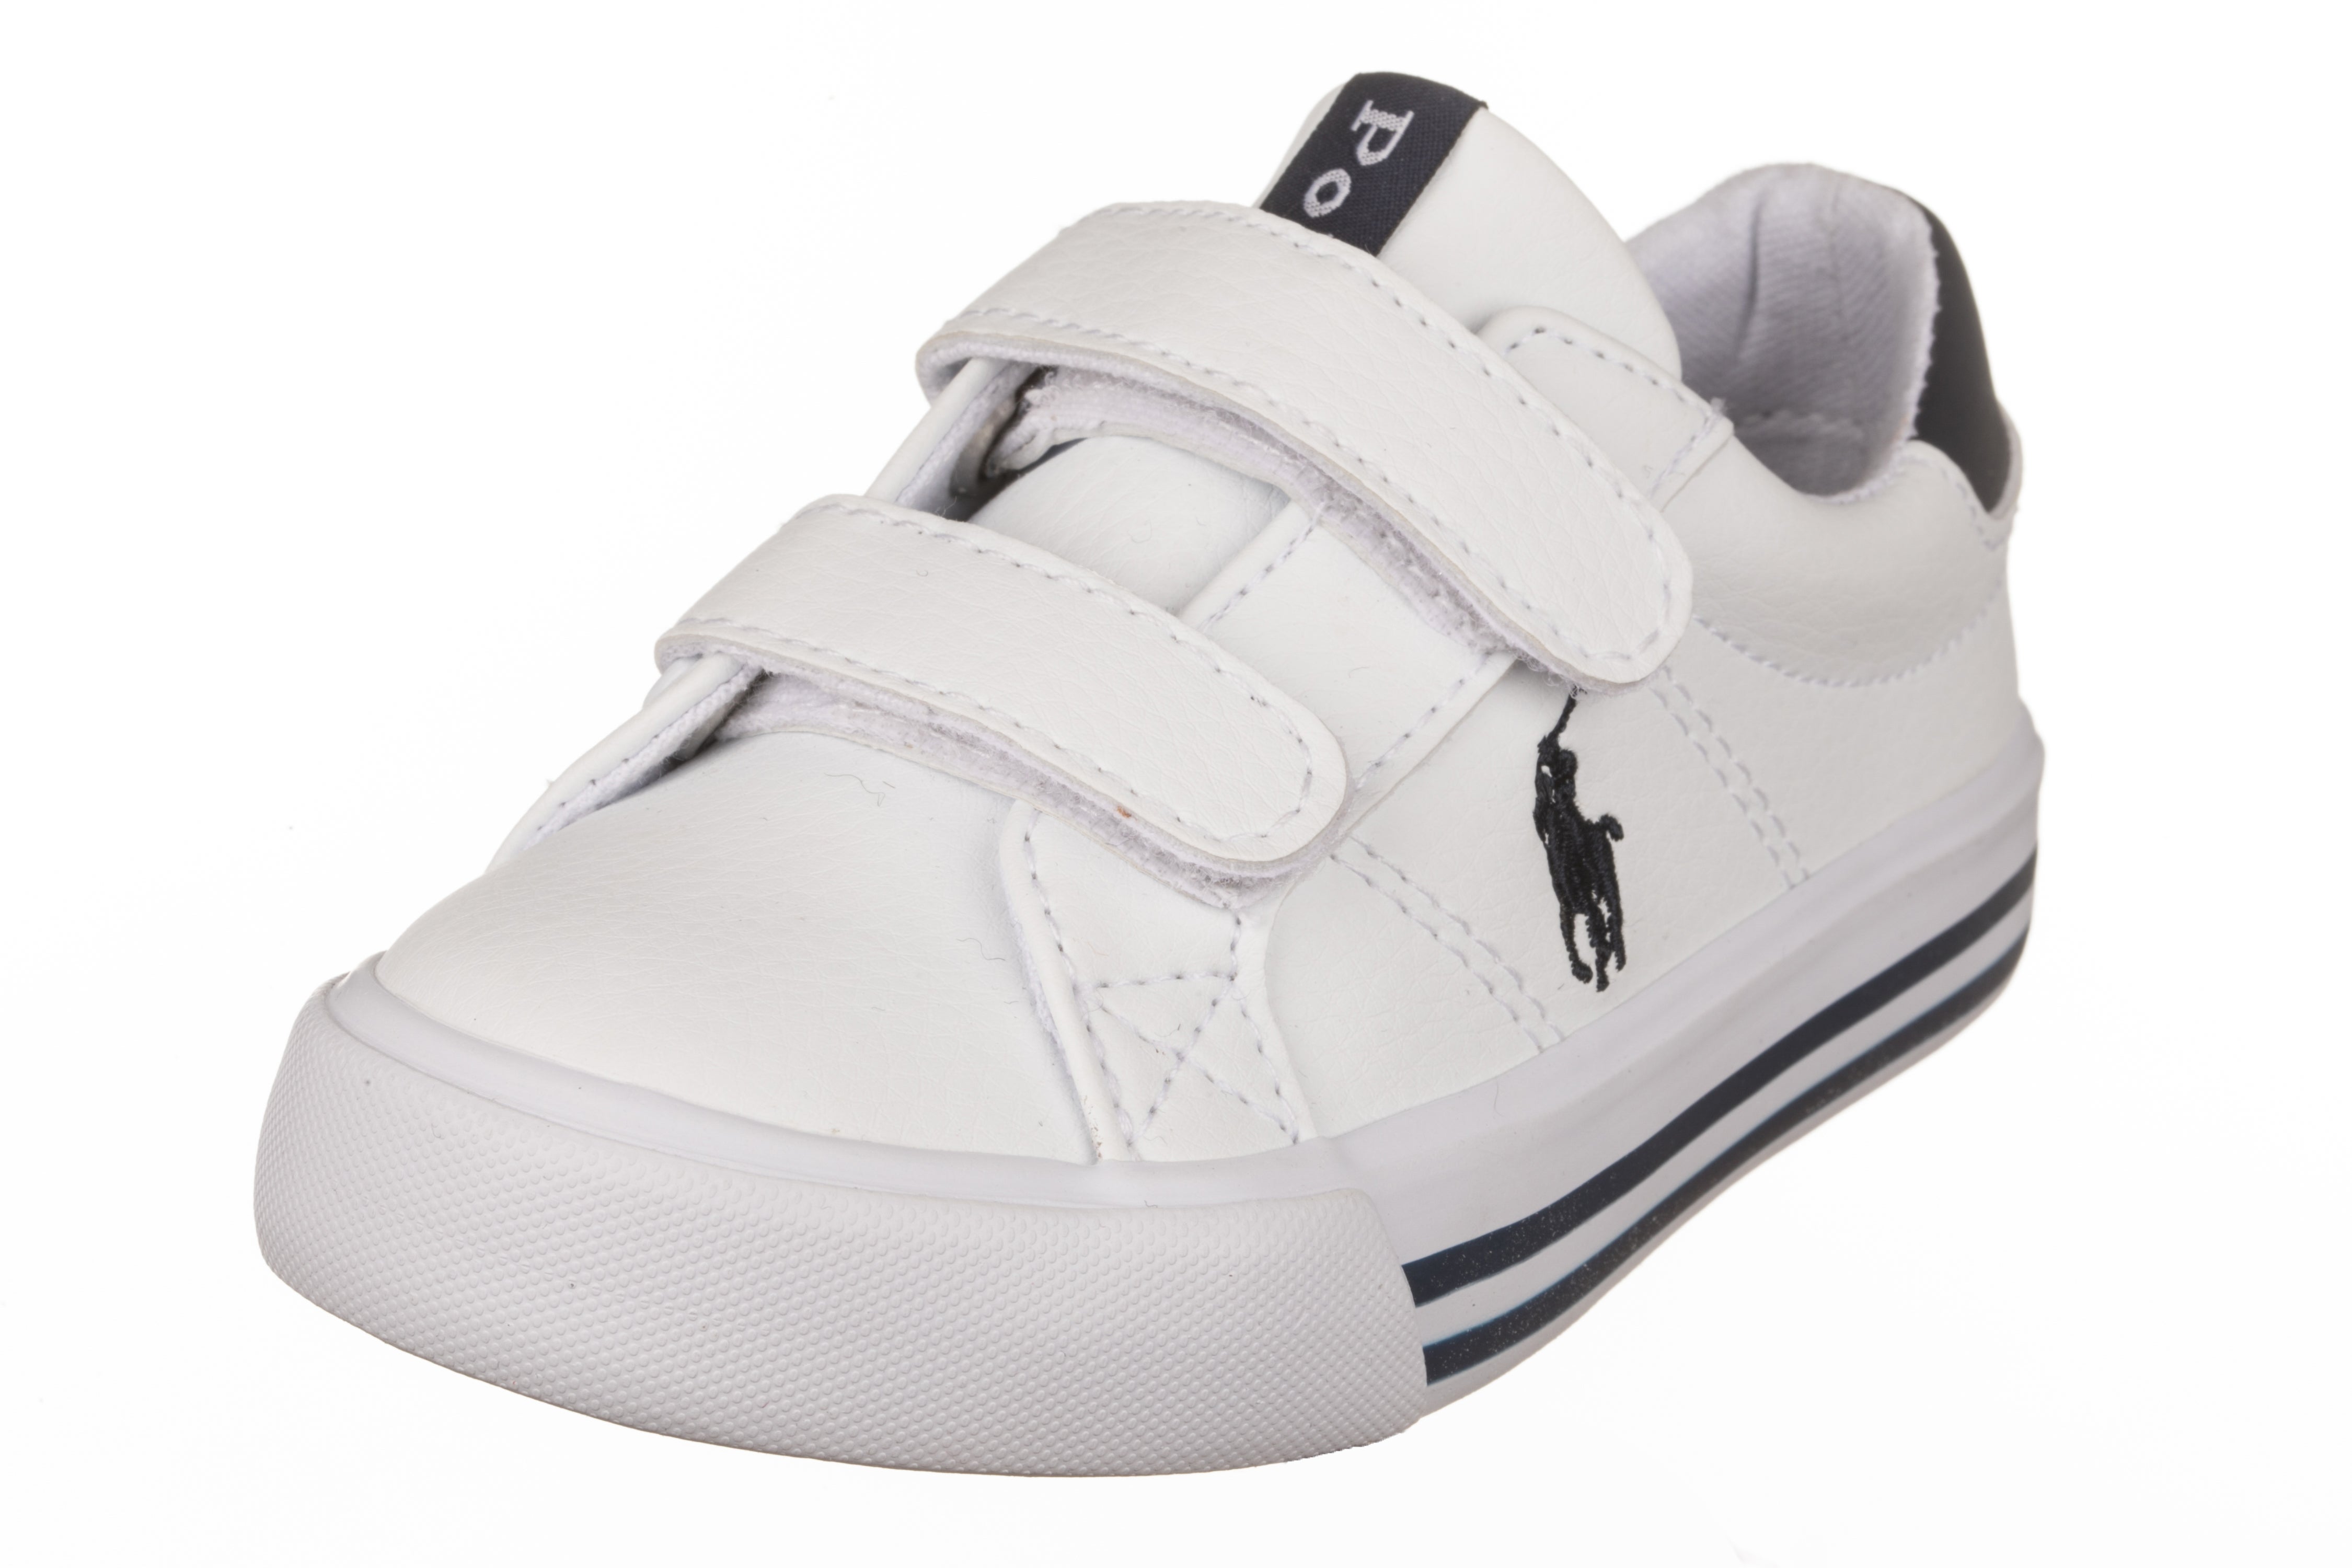 polo ralph lauren white shoes